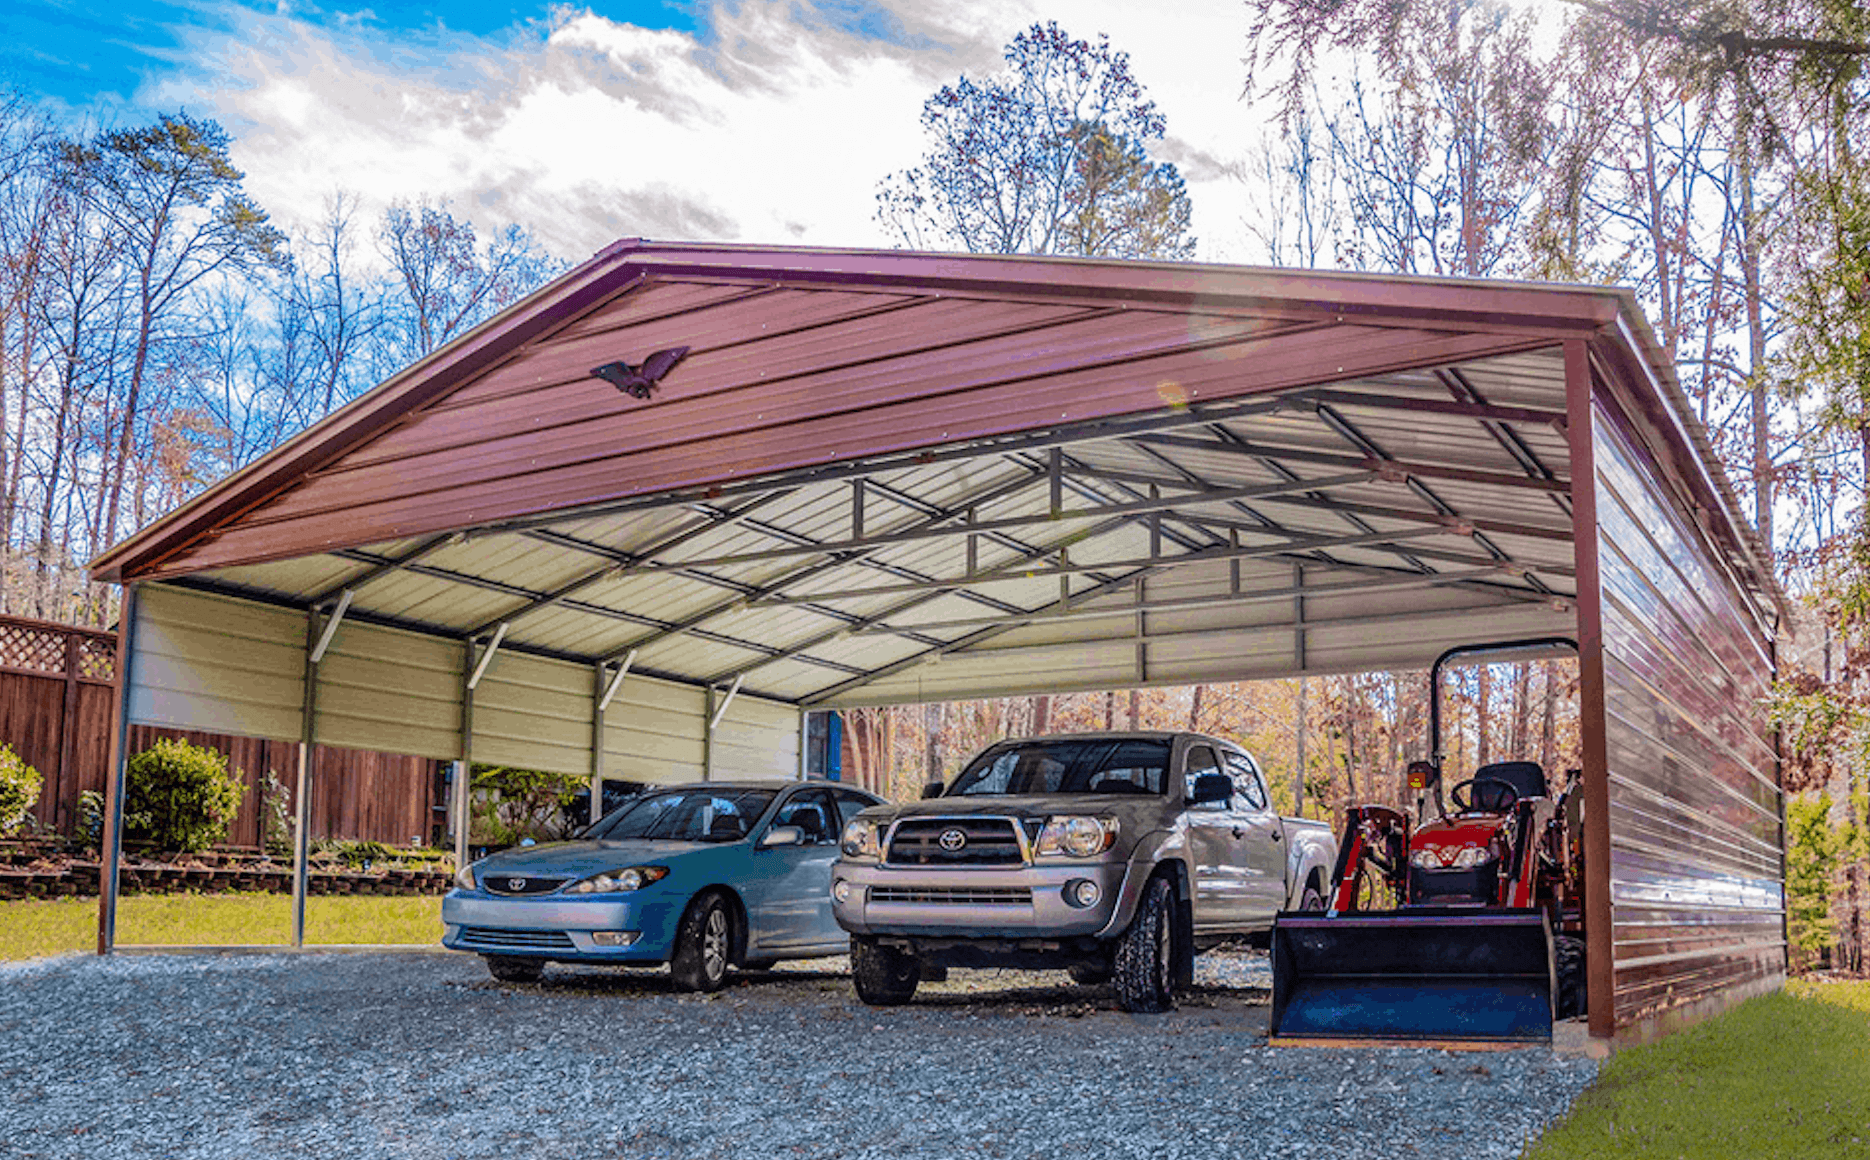 Vertical roof style RV carport